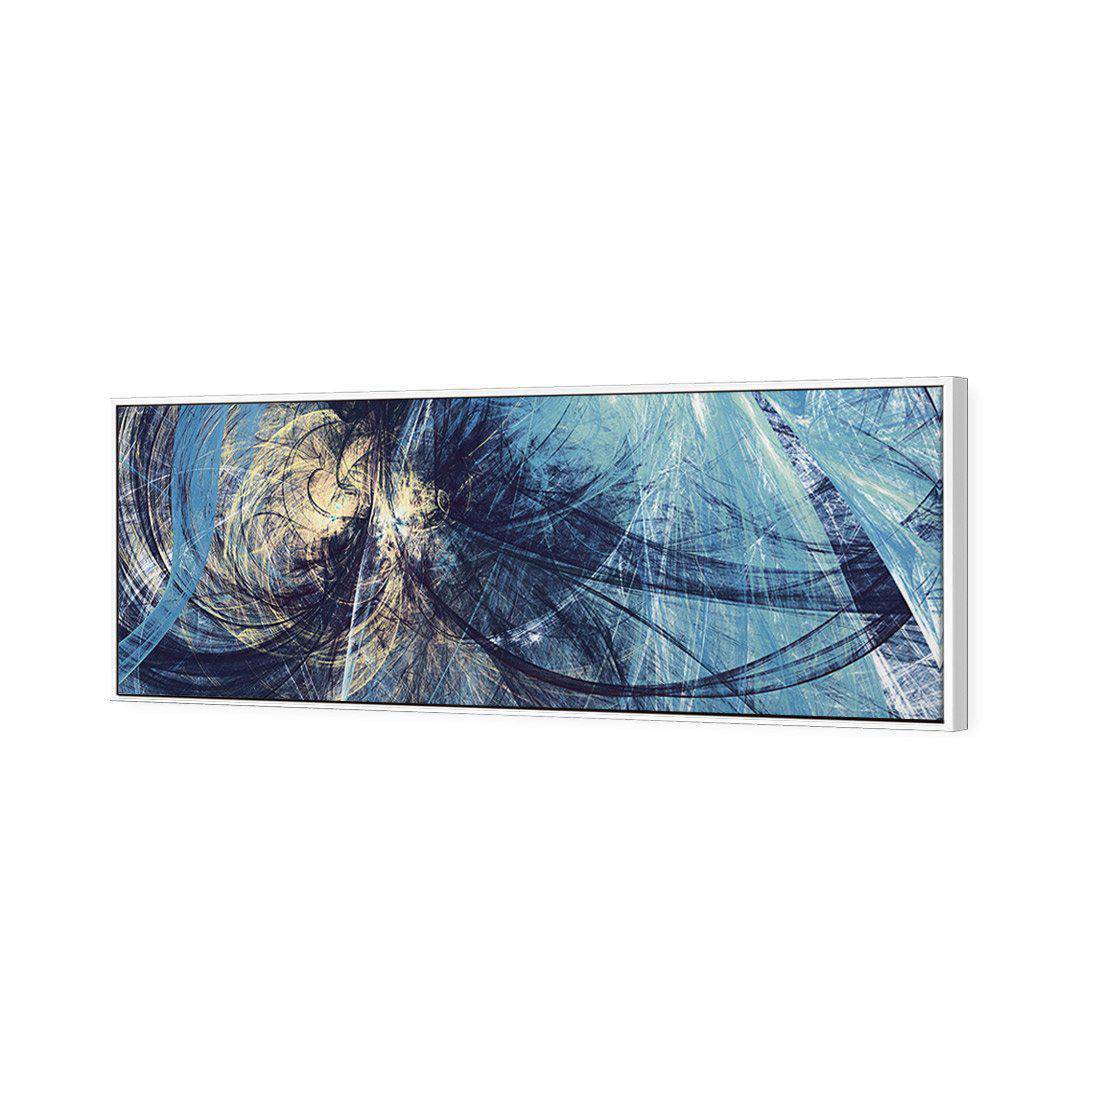 Underwater Peril Canvas Art-Canvas-Wall Art Designs-60x20cm-Canvas - White Frame-Wall Art Designs